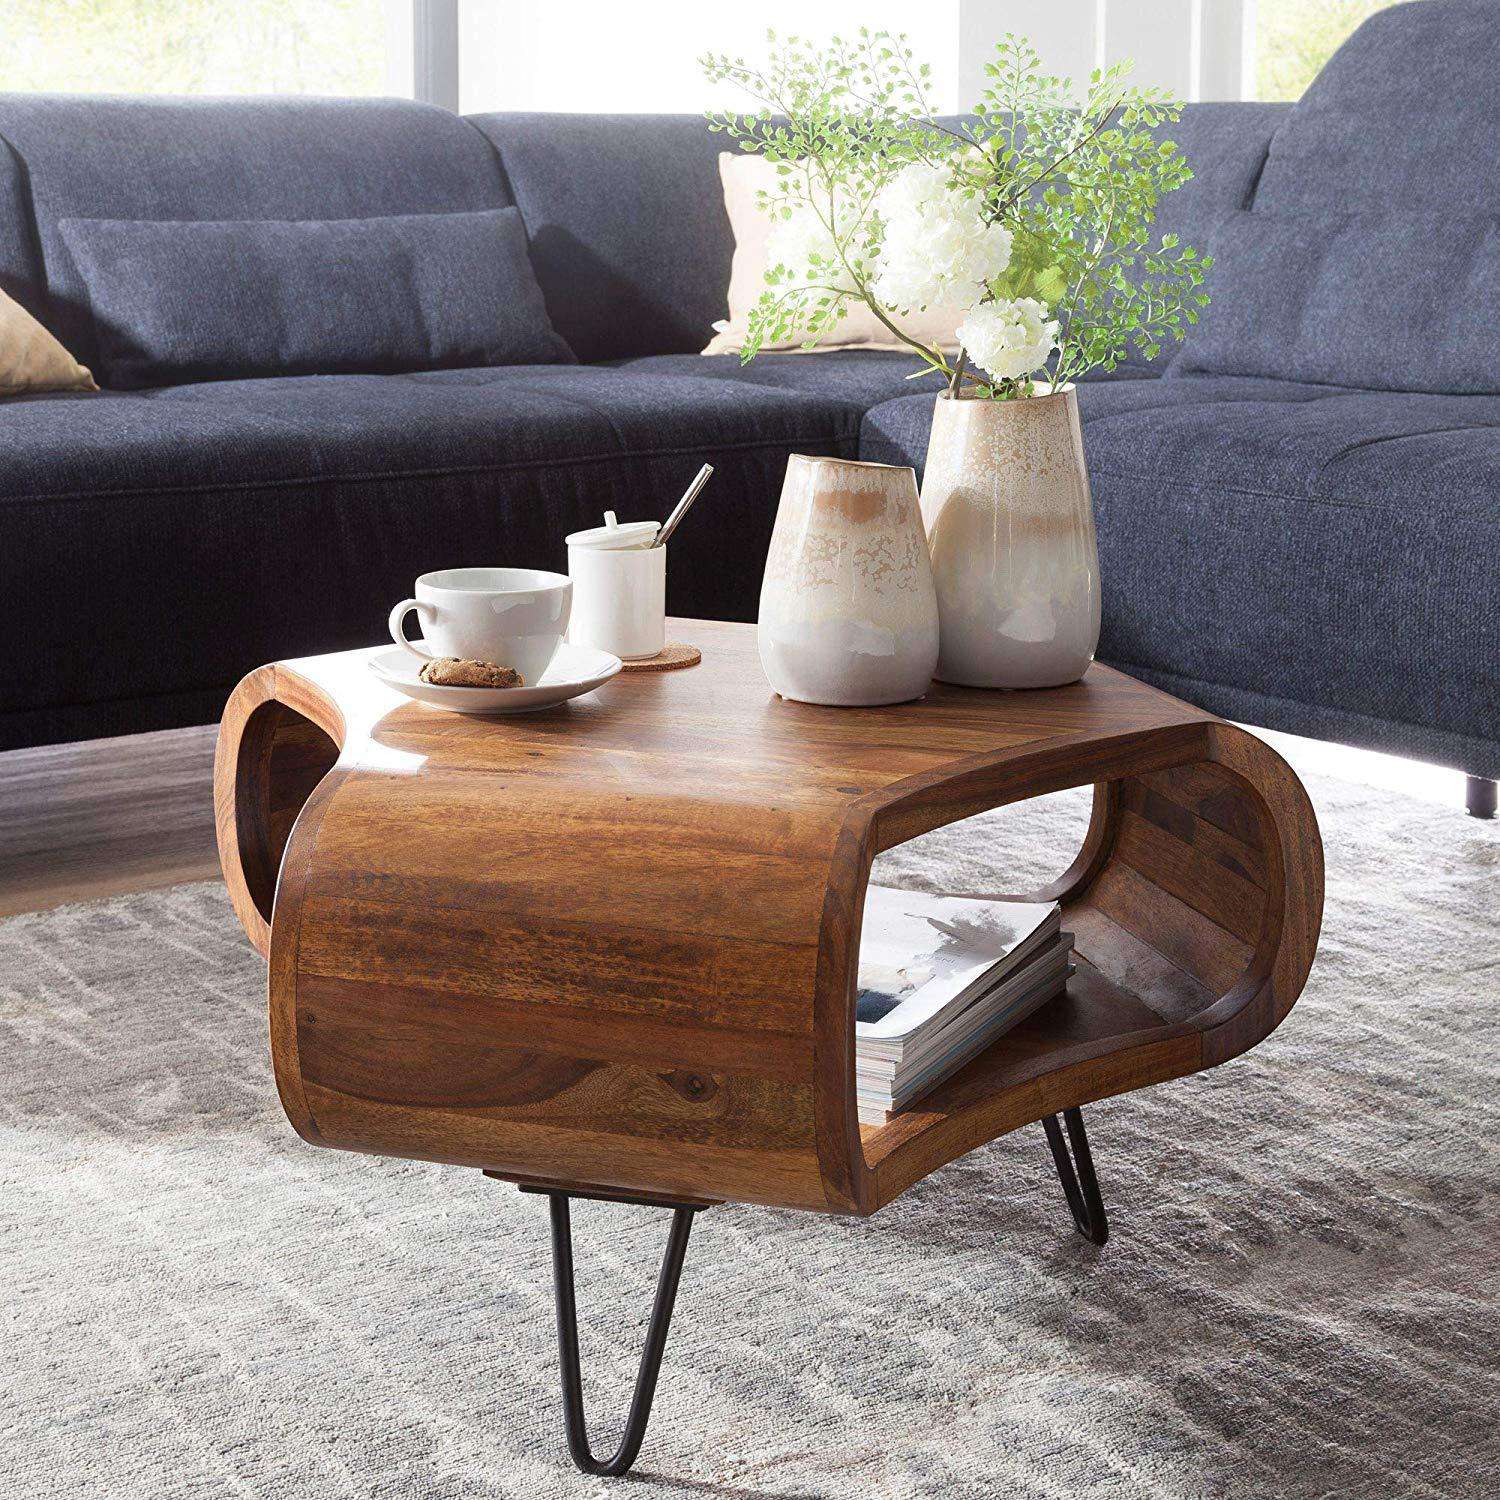 Nancy's Coffee Table Wood - Modern Wooden Coffee Tables - Sheesham Wood - Brown - 55 x 38 x 55 cm